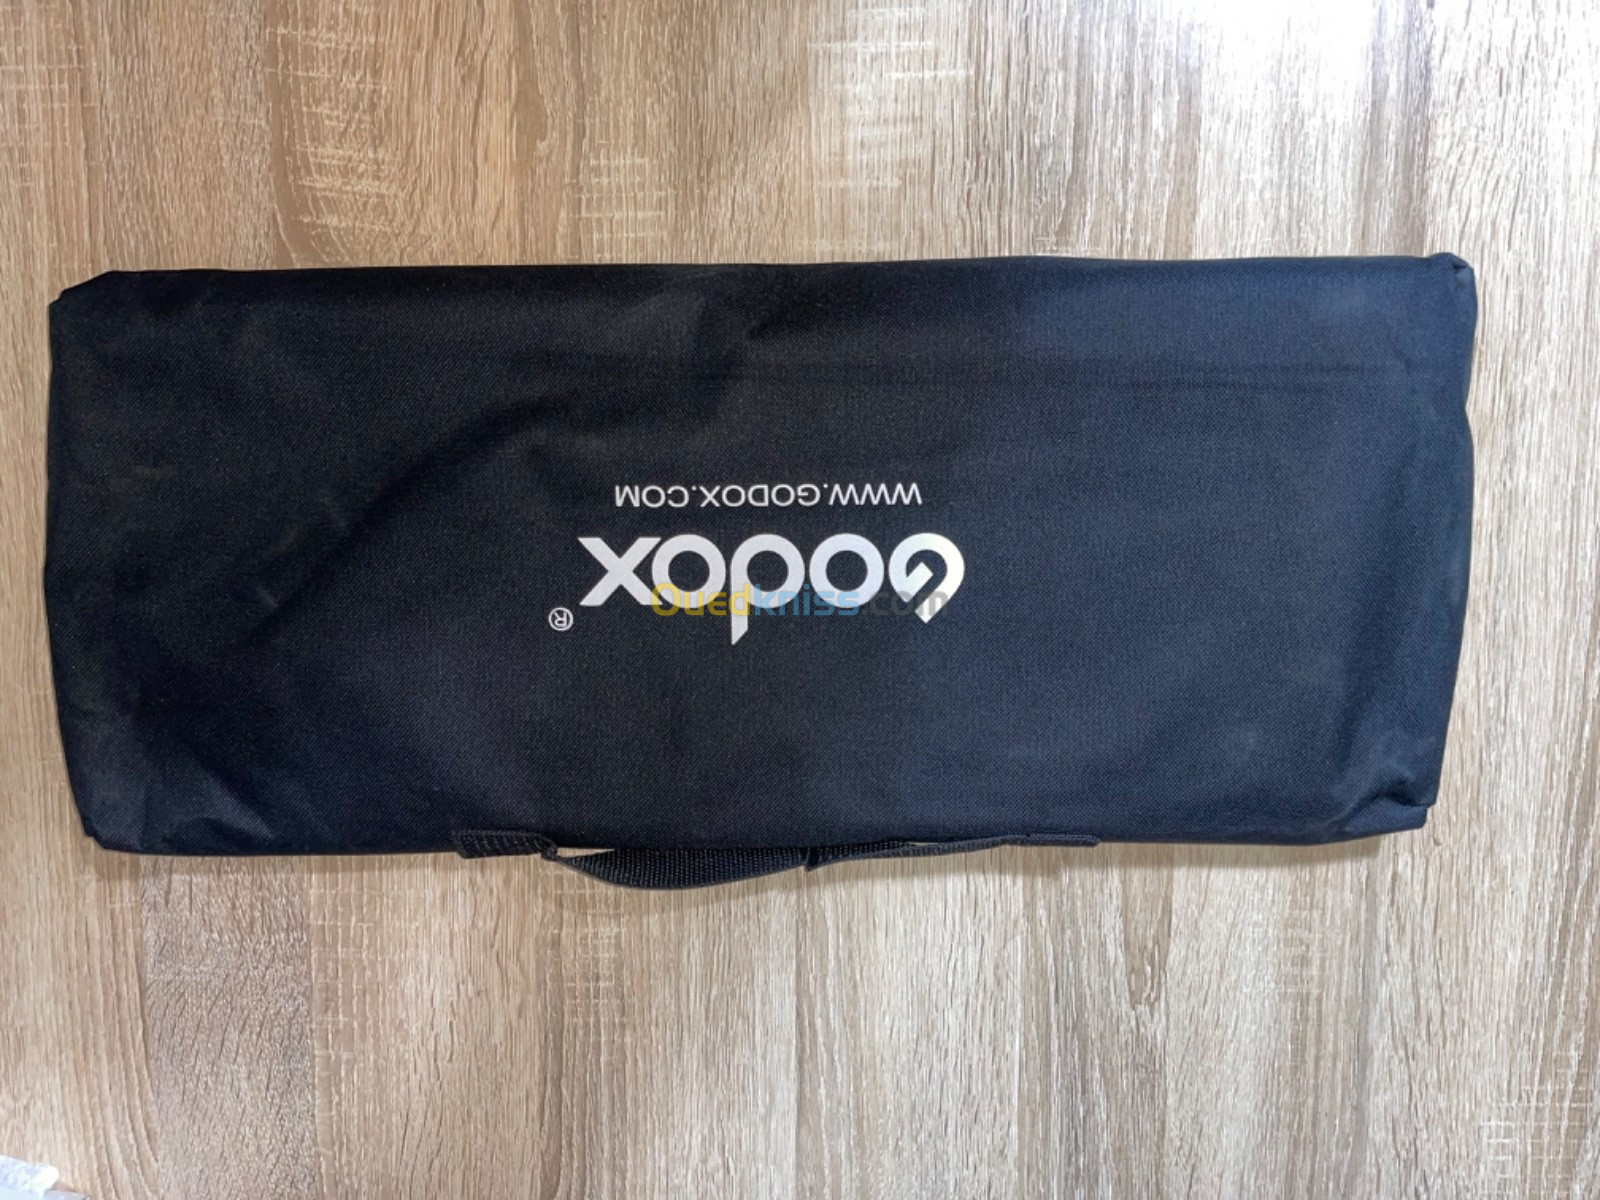 Kit Softbox 5-Lampe GODOX TL-5 Bowens Kit